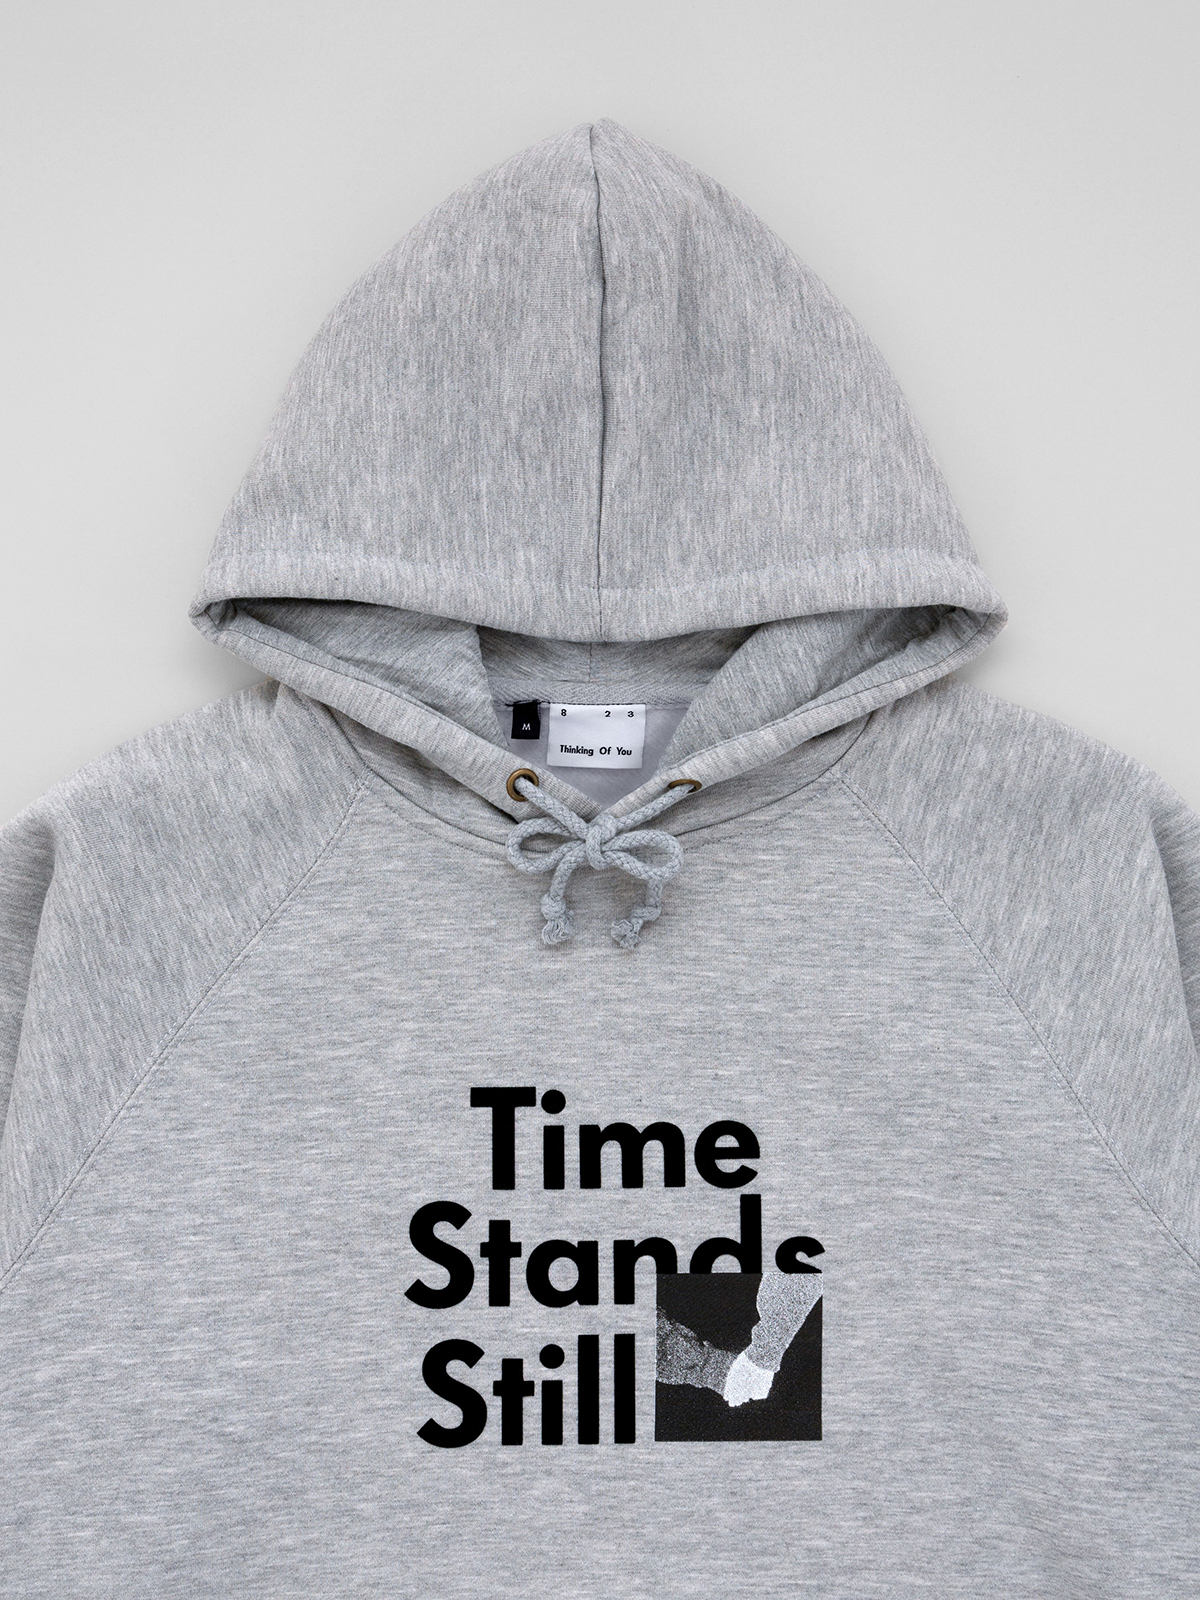 Ta ku&#x27;s 823 Brand Readies New &#x27;Time Stands Still&#x27; Collection